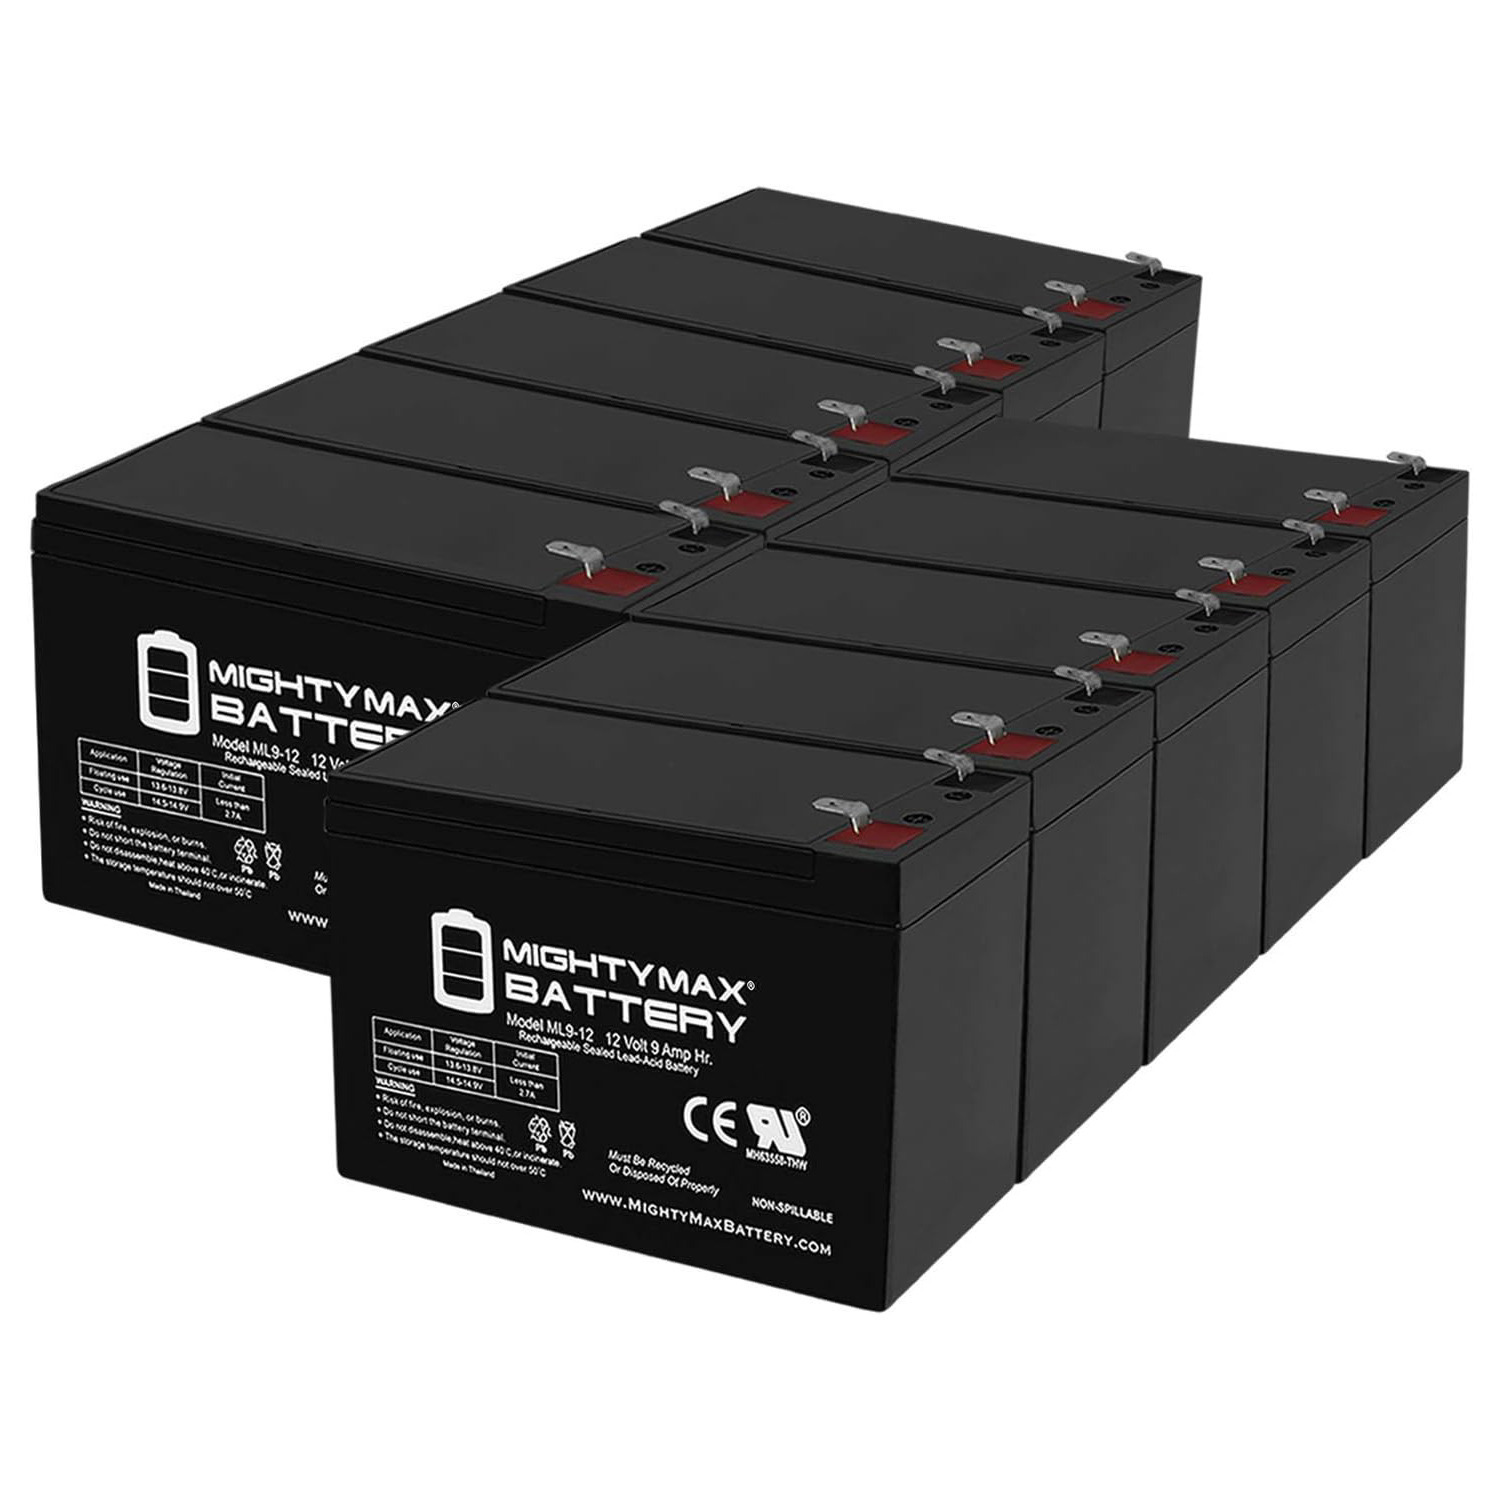 Altronix SMP7CTX 12V, 9Ah Lead Acid Battery - 10 Pack